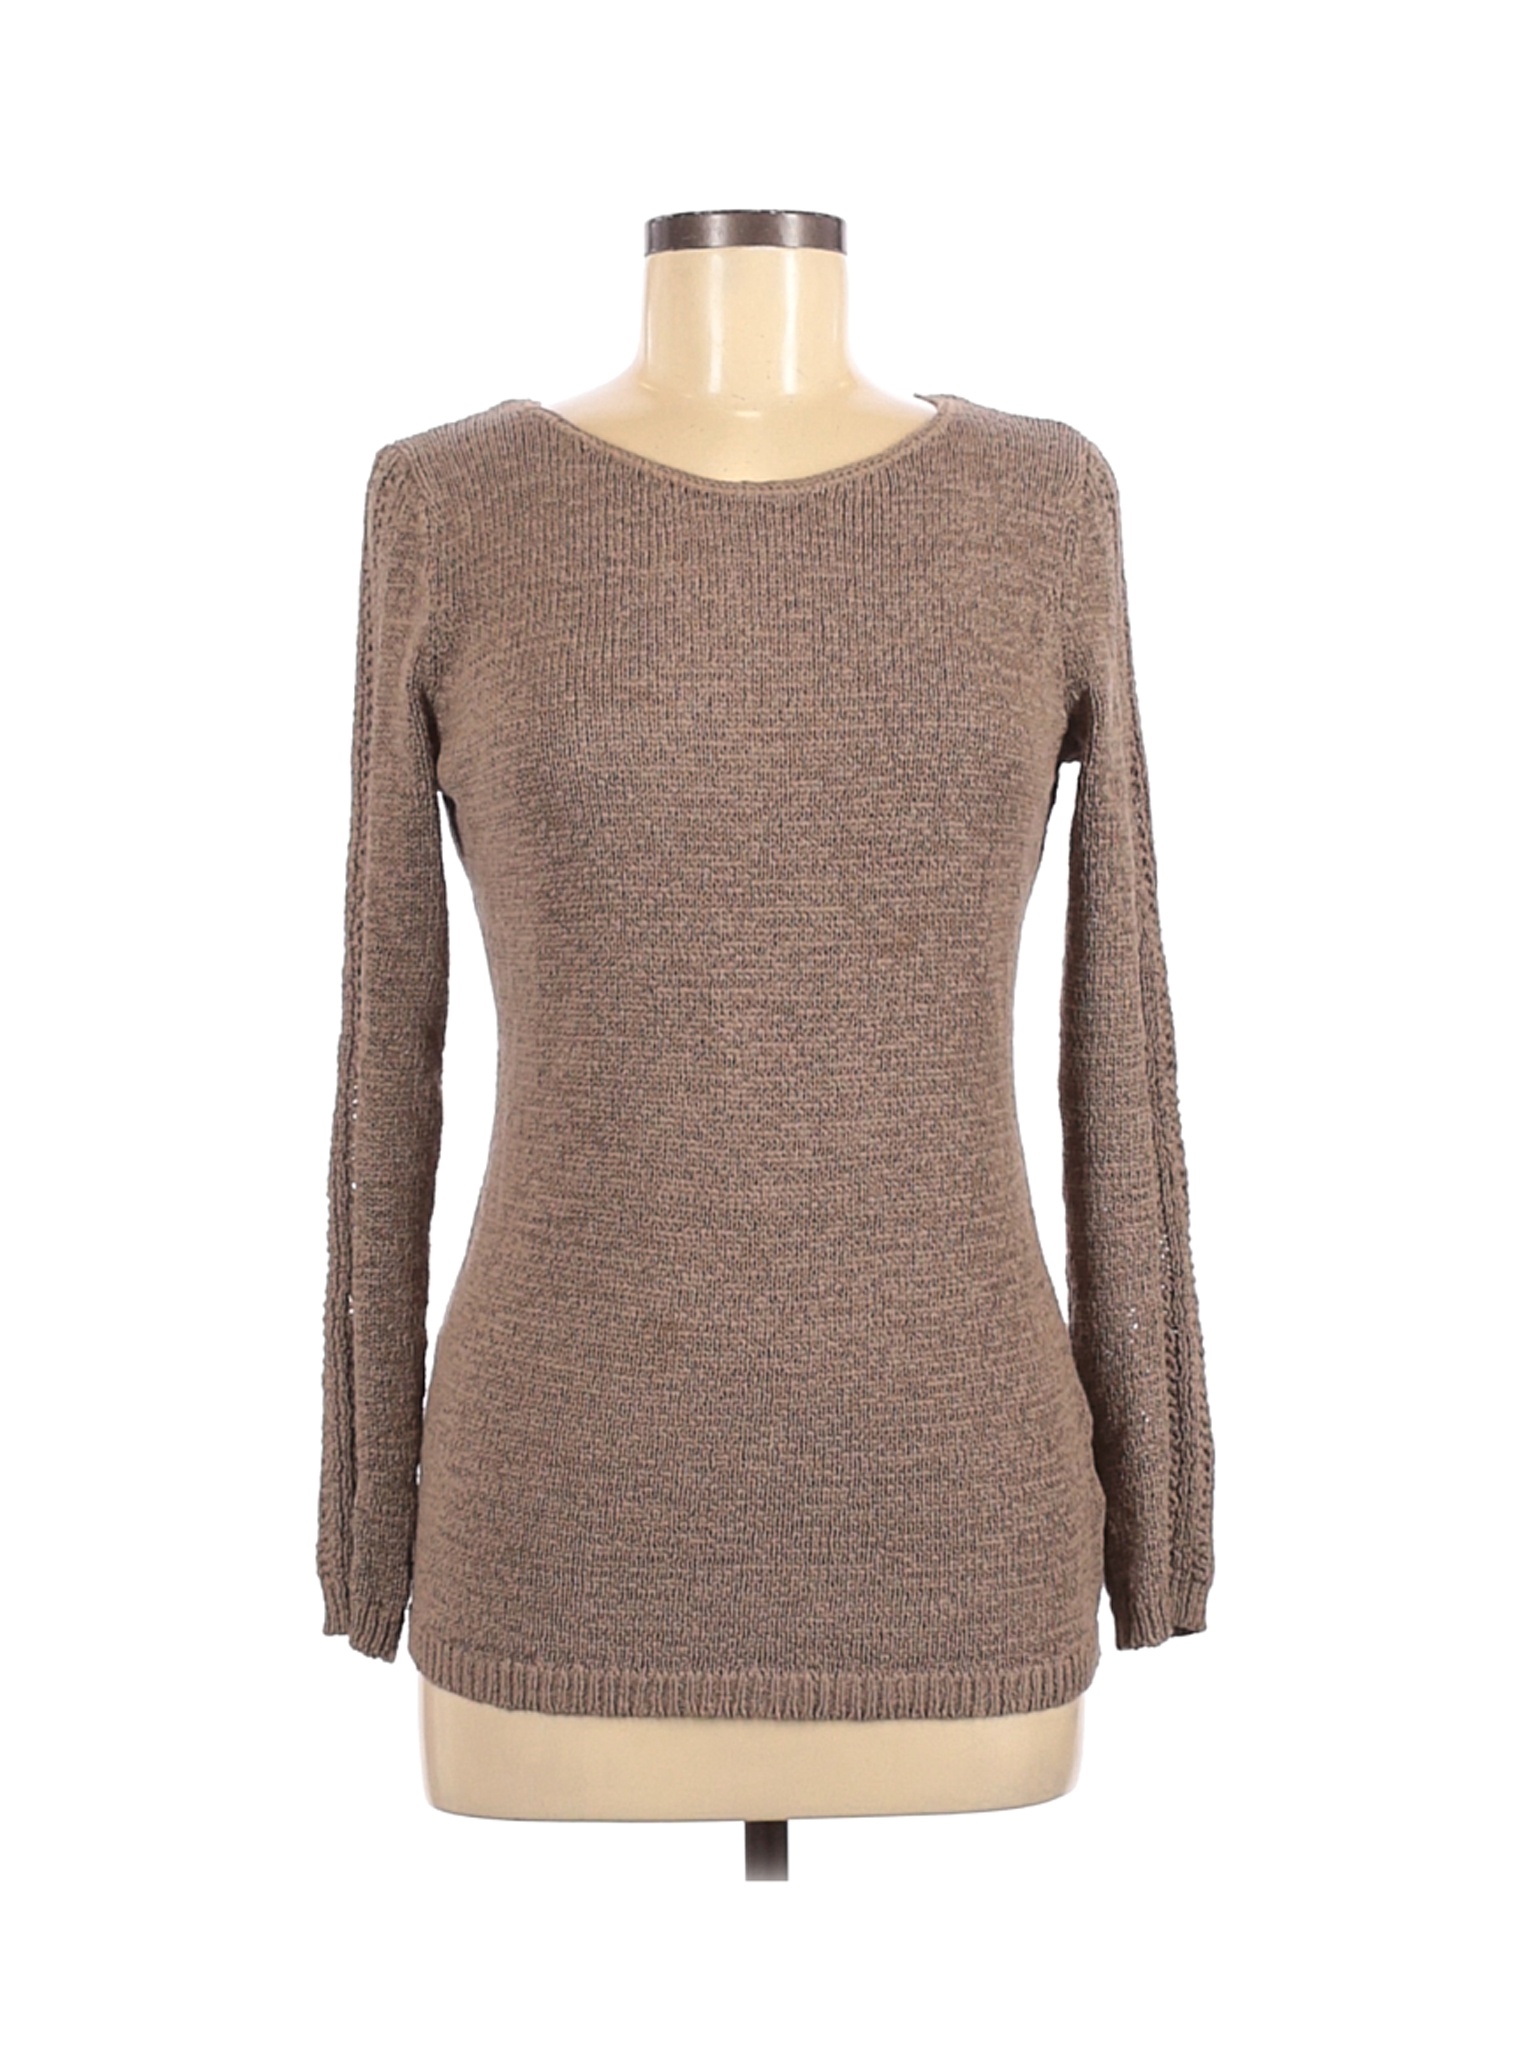 Rachel Zoe Women Brown Pullover Sweater M | eBay